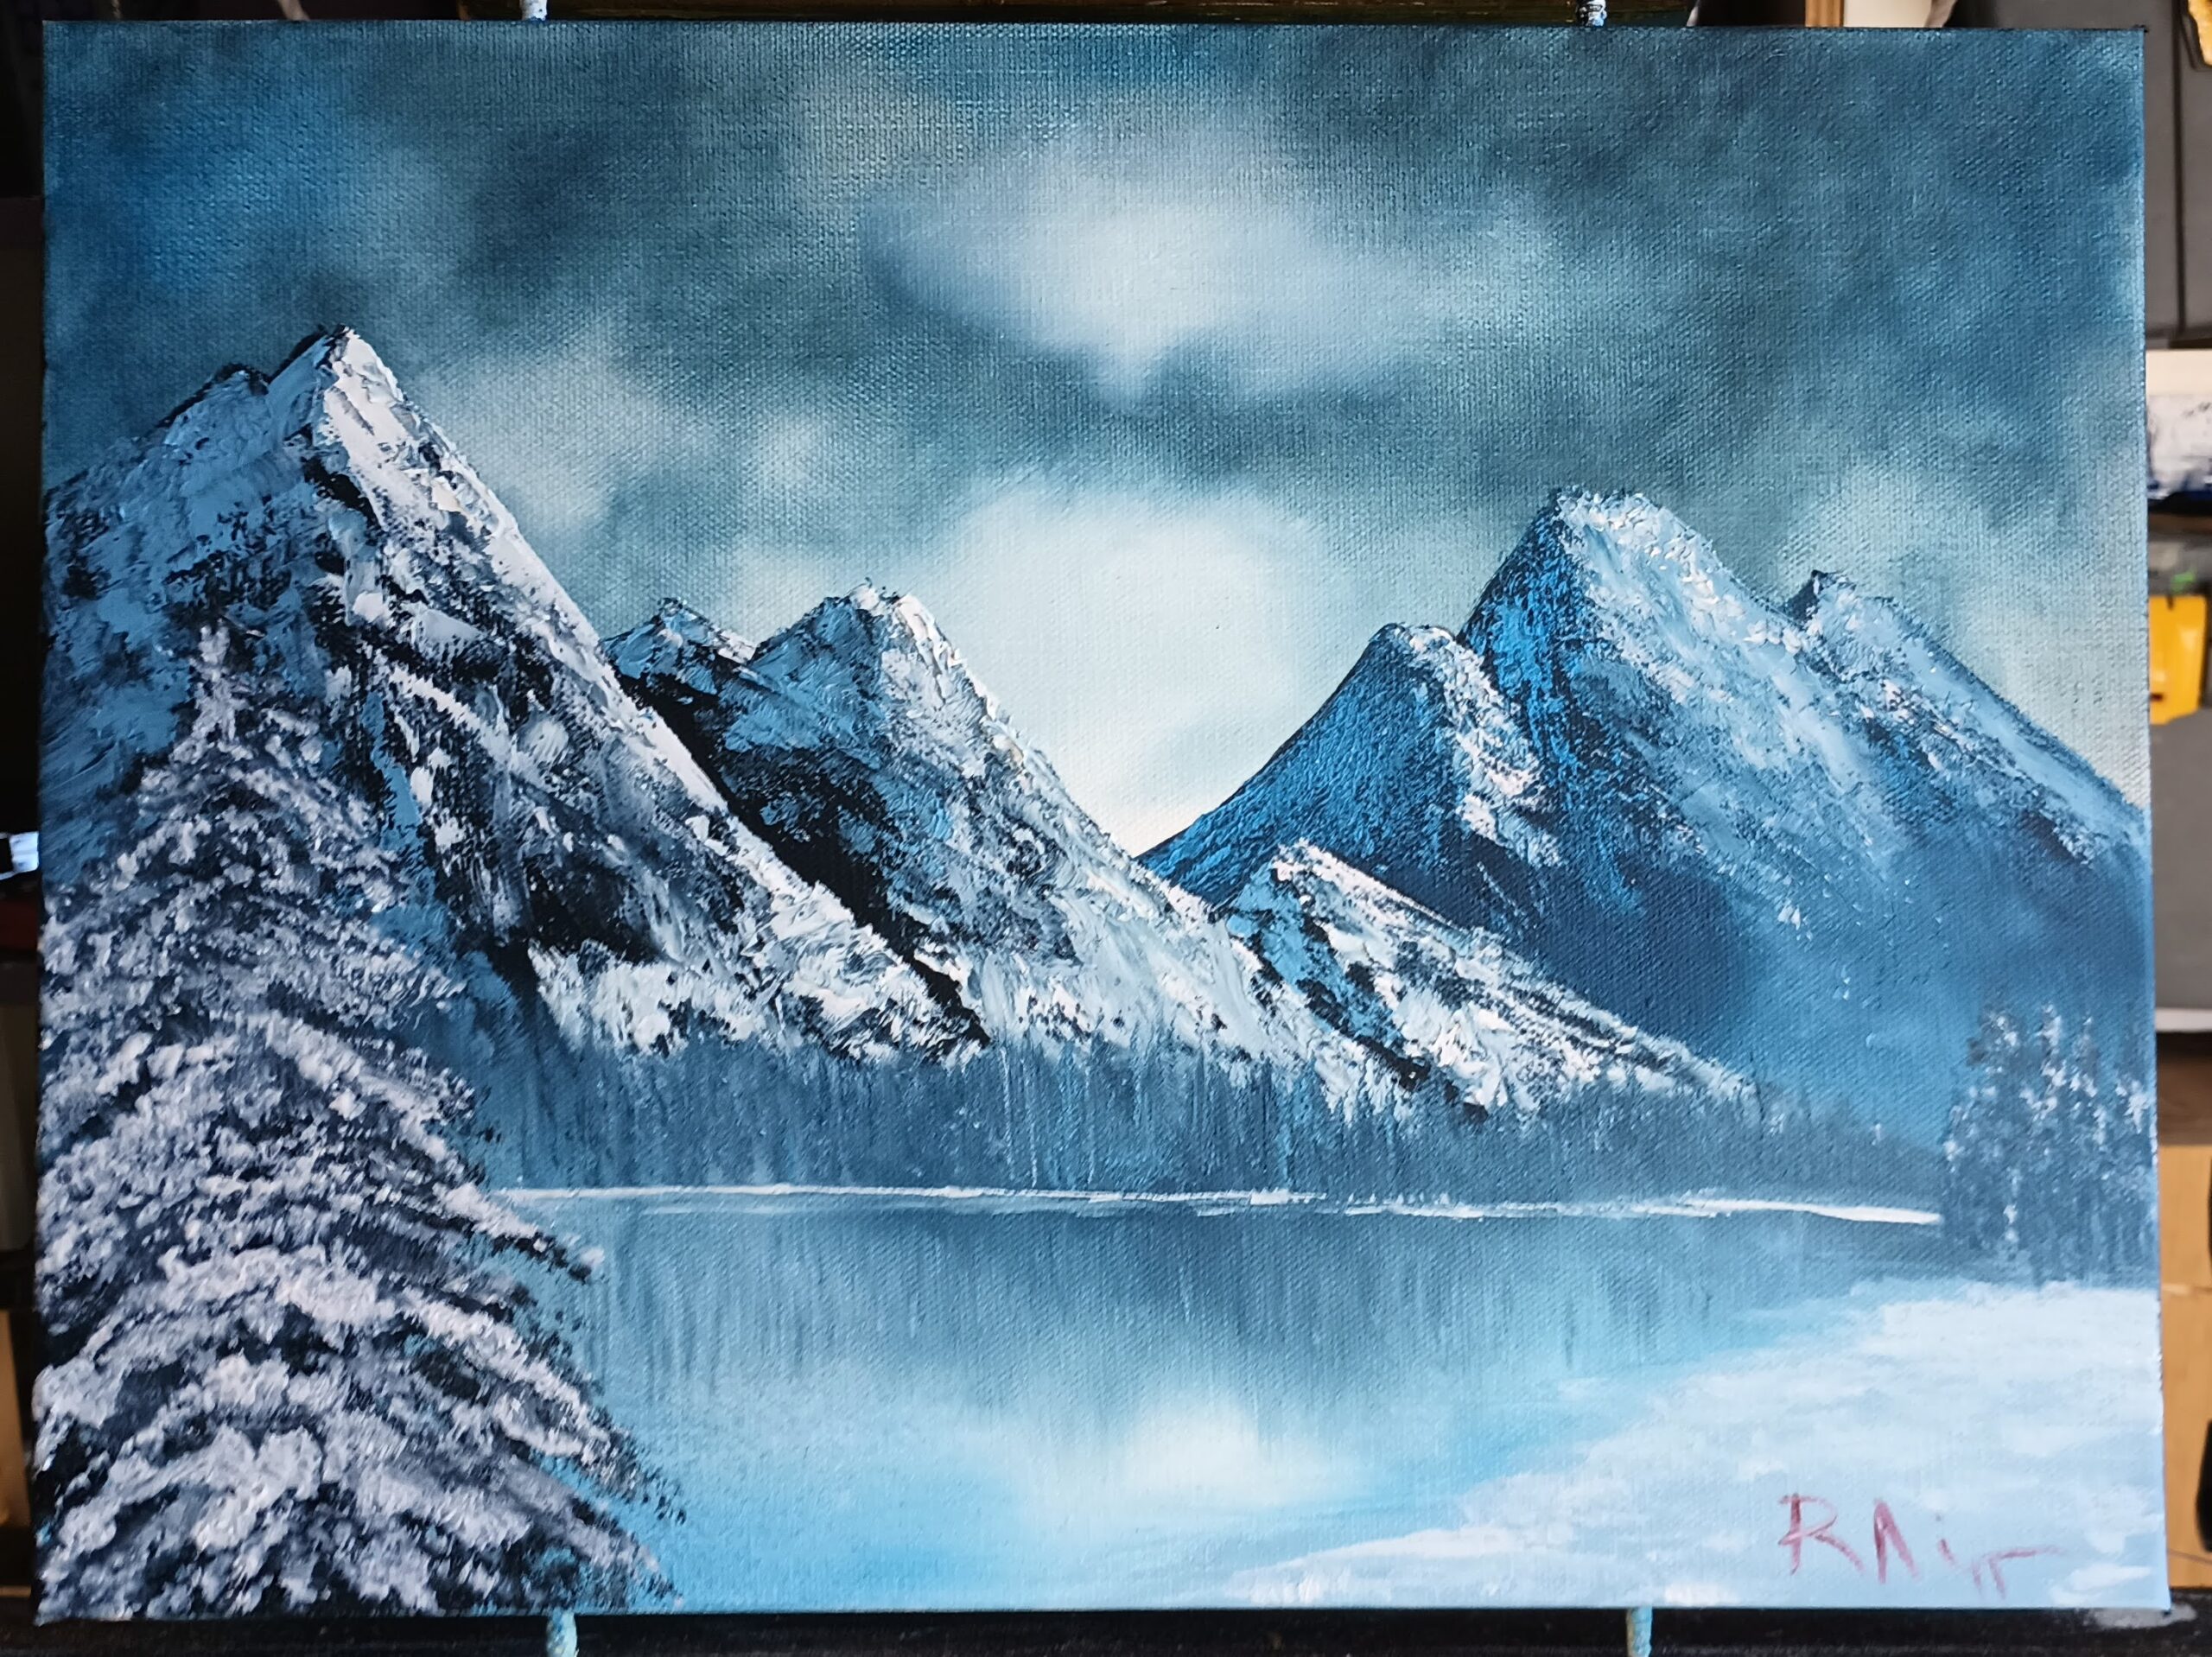 16 x 20 oil on canvas of a snowy mountain range